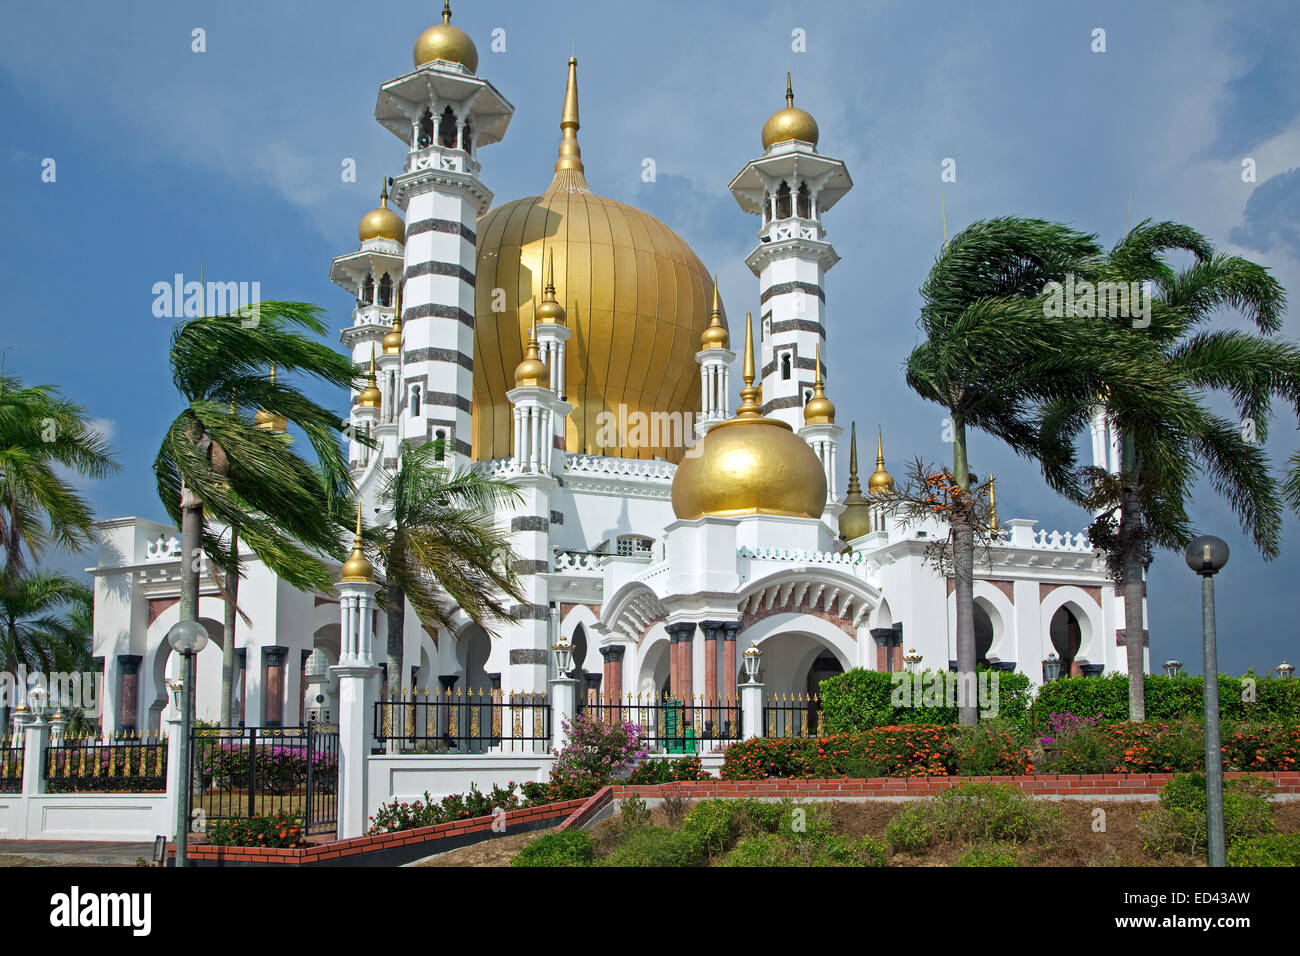 La mosquée Ubudiah / Masjid Ubudiah avec dôme doré à Kuala Kangsar, Perak, Malaisie Banque D'Images